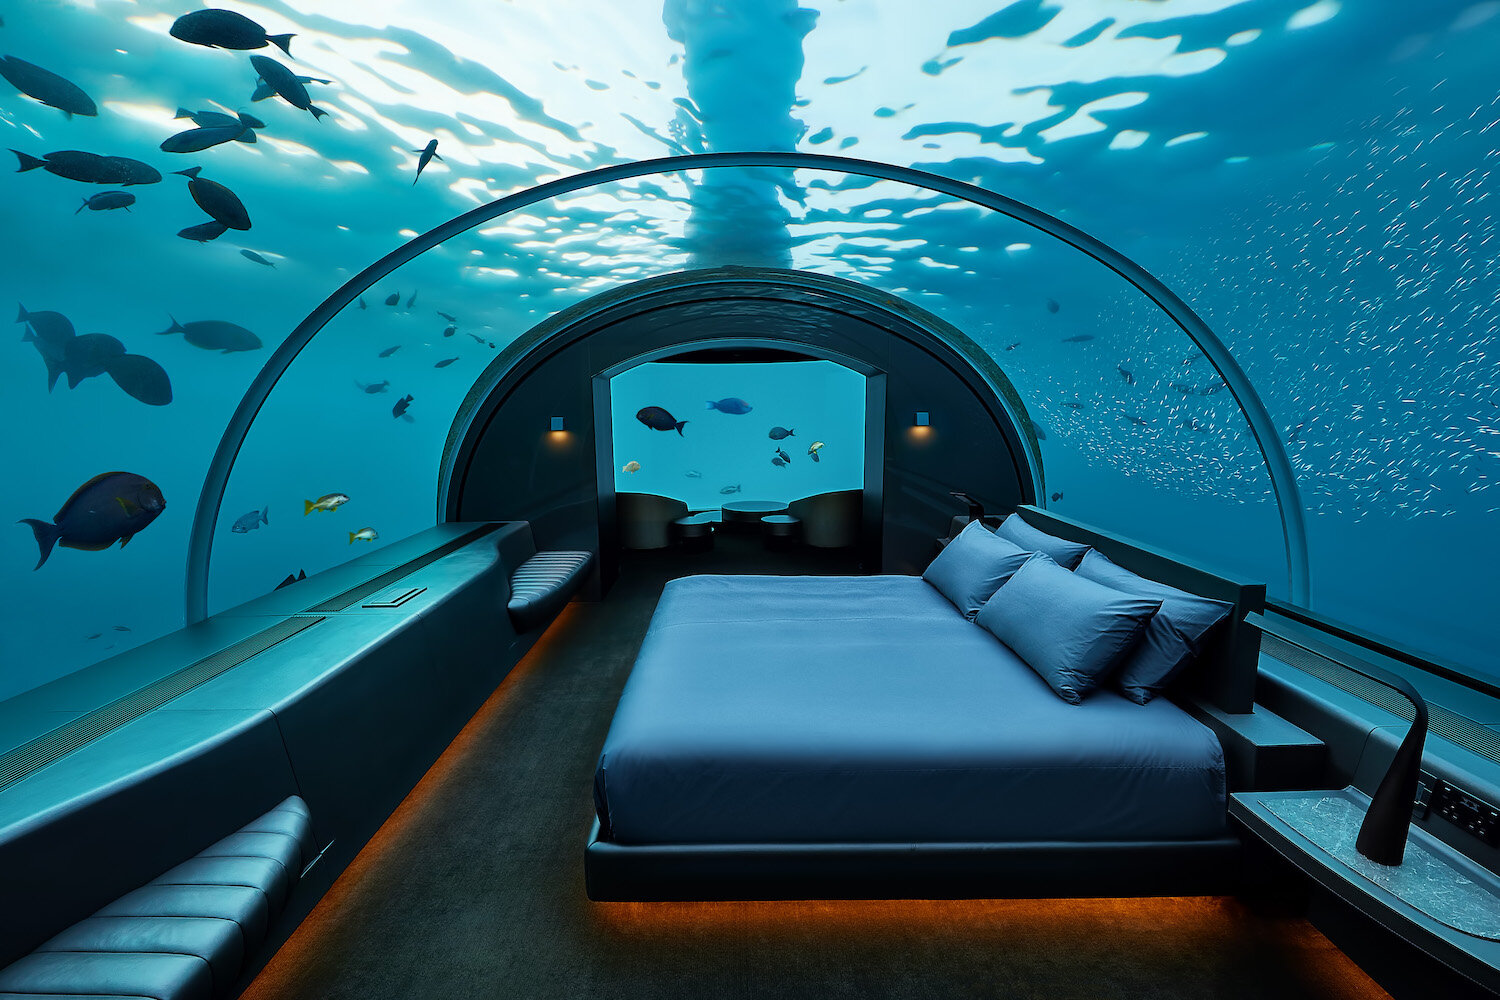 THE MURAKA_Undersea Bedroom_Day_Architectual credit Justin Nicholas - hi-res copy.jpg